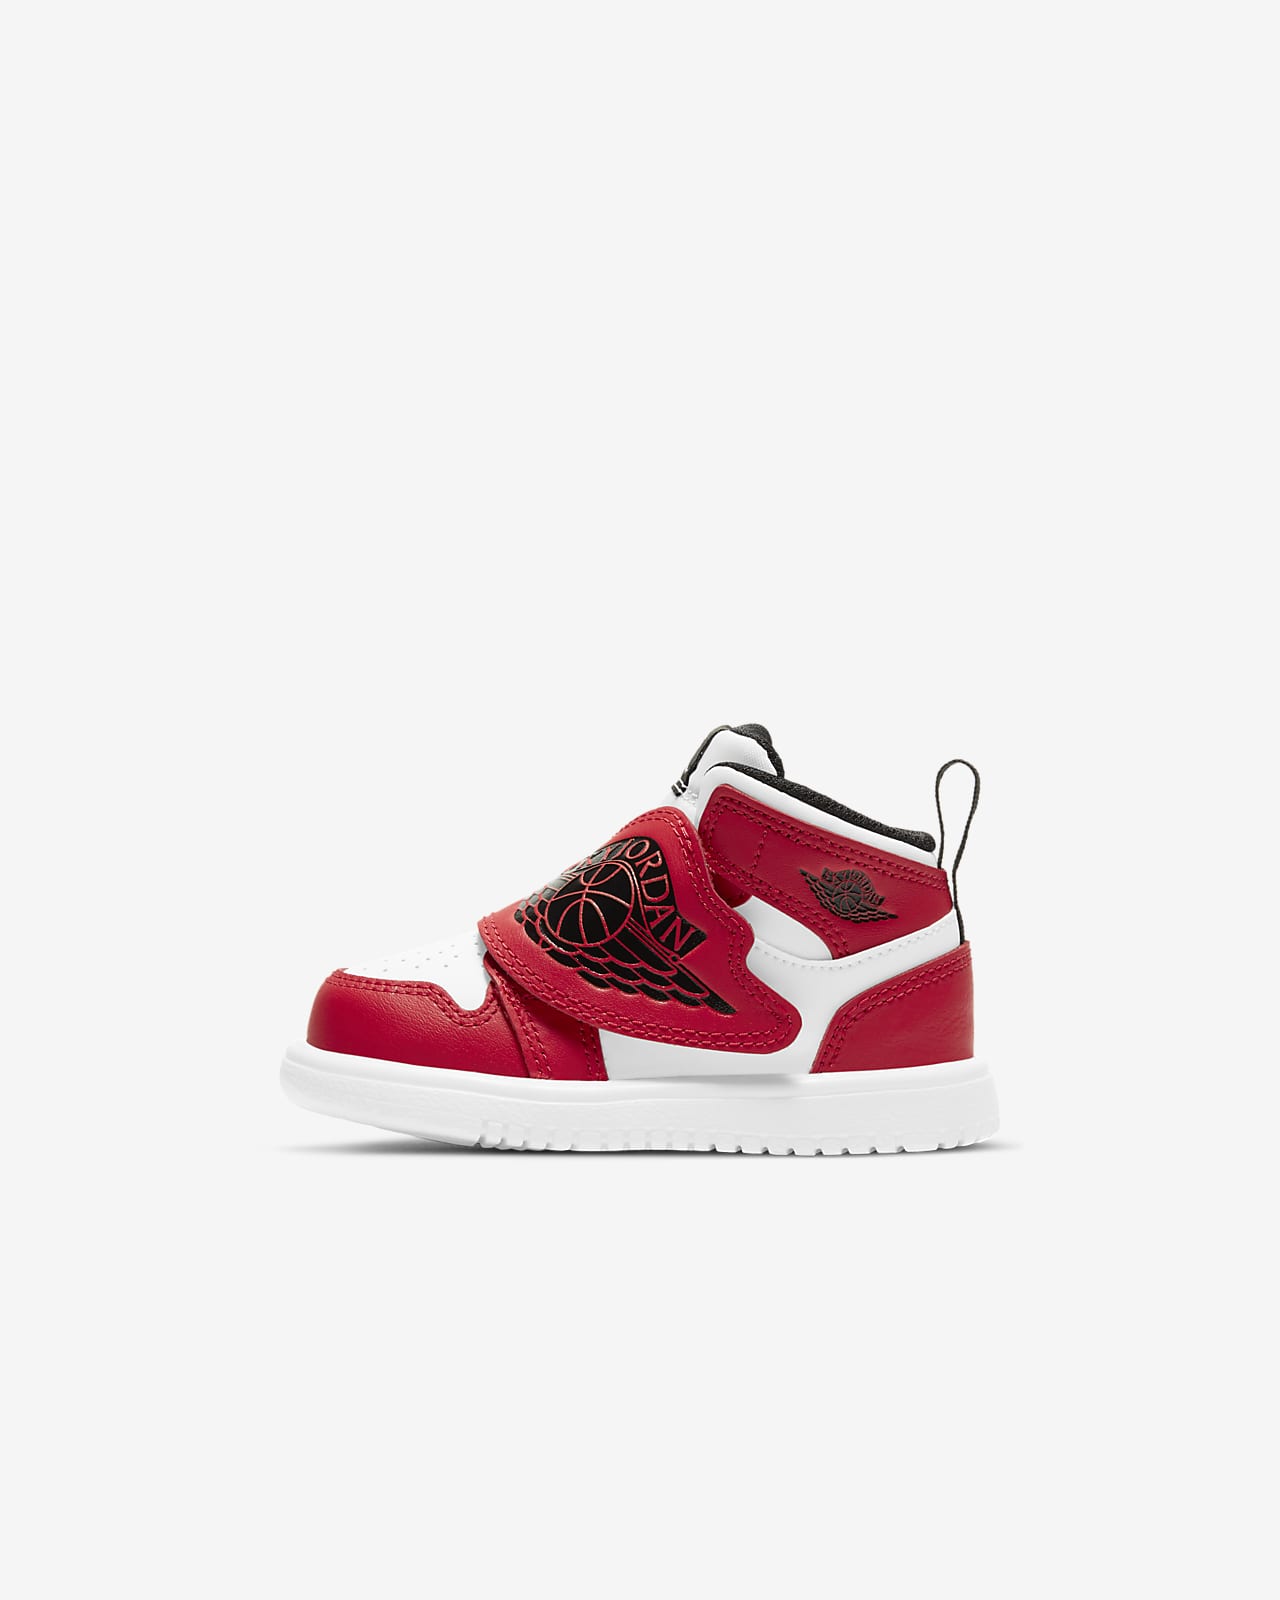 Sky Jordan 1 Baby and Toddler Shoe. Nike LU